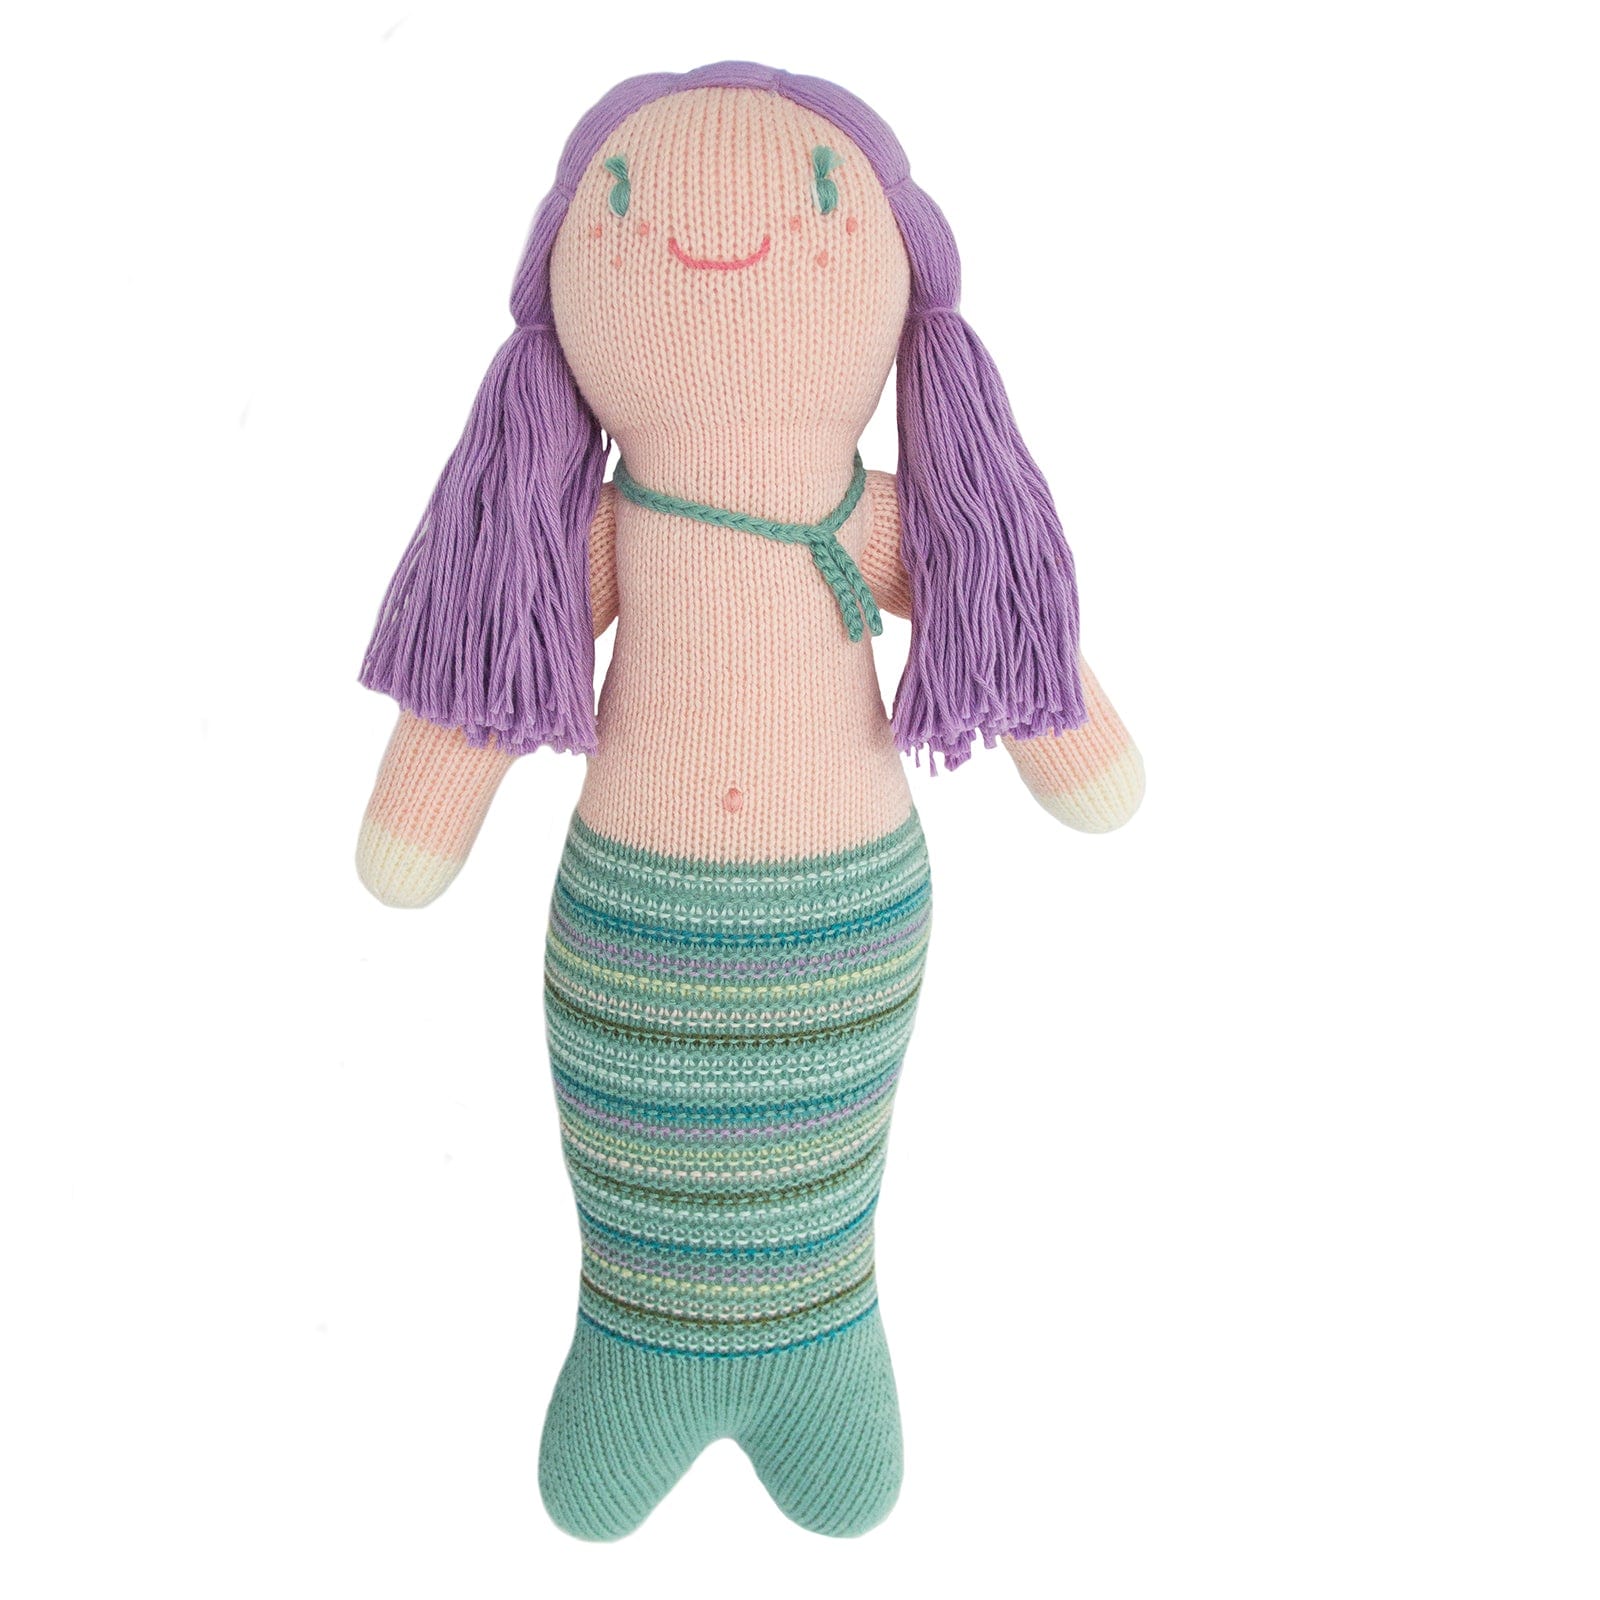 Calypso the Mermaid Doll